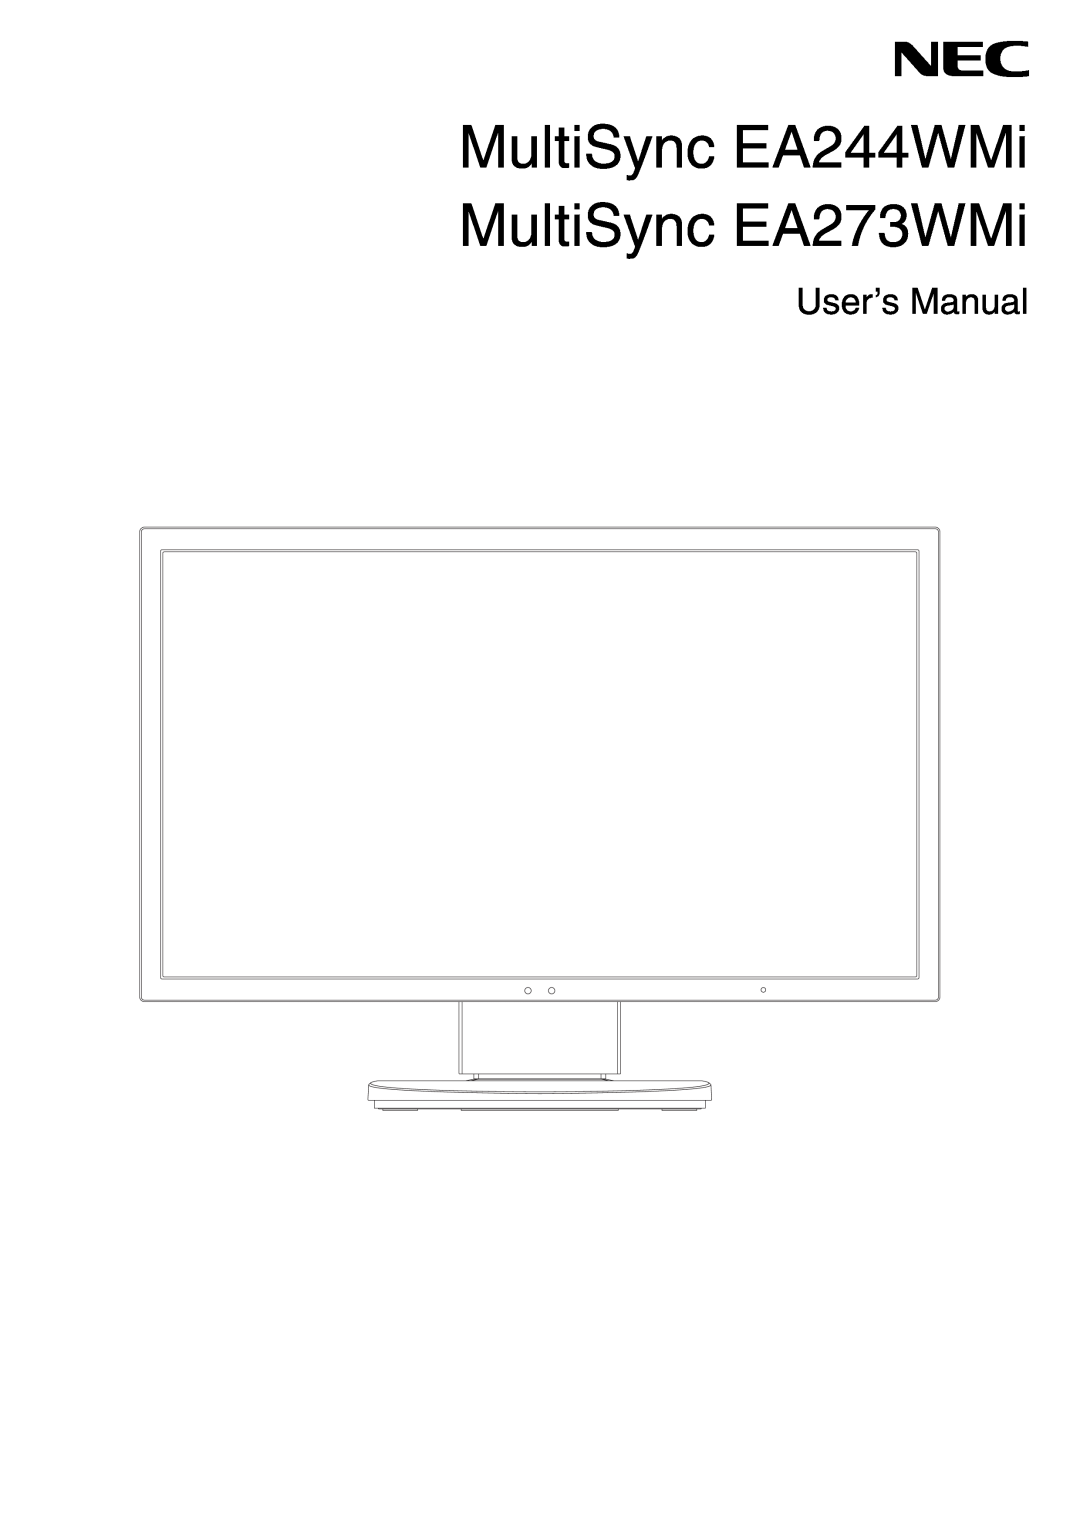 NEC EA244WMI-BK user manual MultiSync EA244WMi MultiSync EA273WMi, User’s Manual 